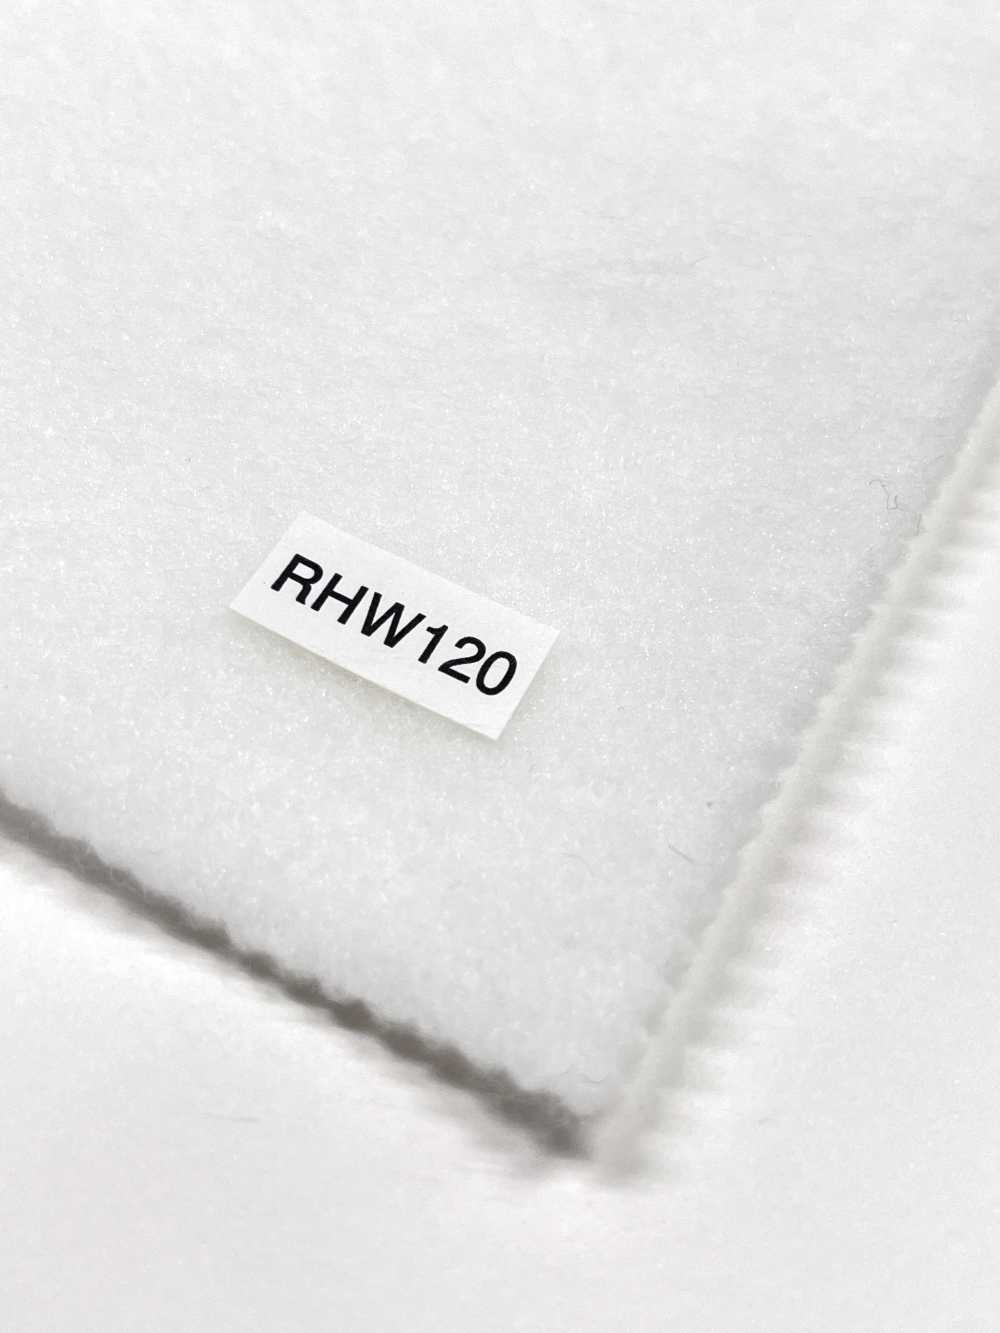 RHW120 Conbel NOWVEN(R) Domit Series Fusible Interlining Soft Type Conbel